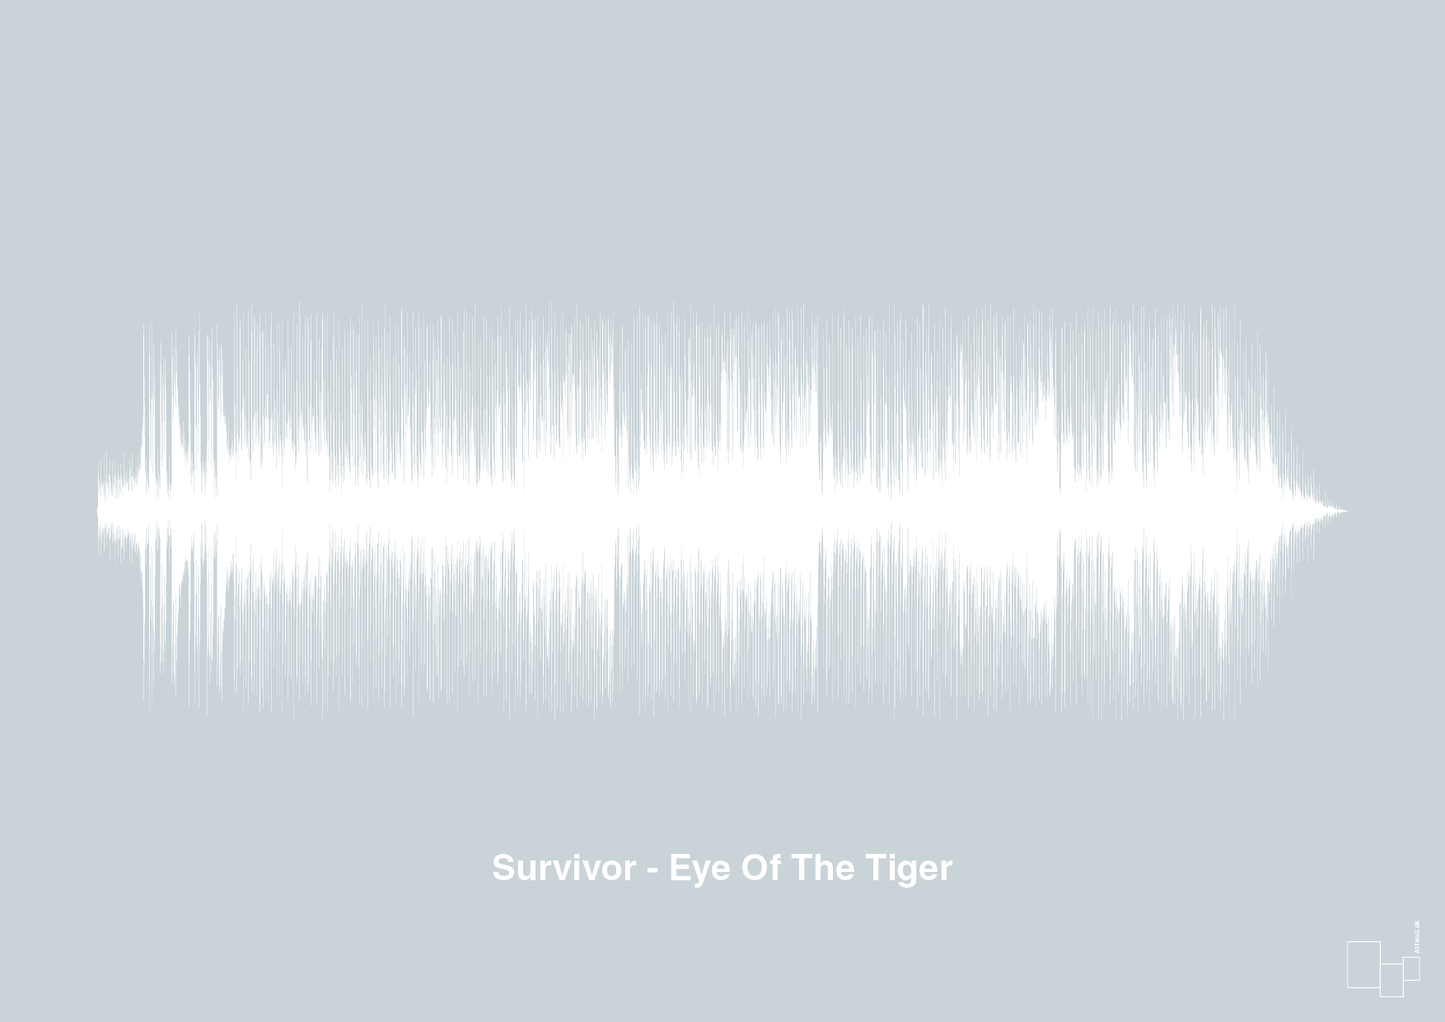 survivor - eye of the tiger - Plakat med Musik i Light Drizzle